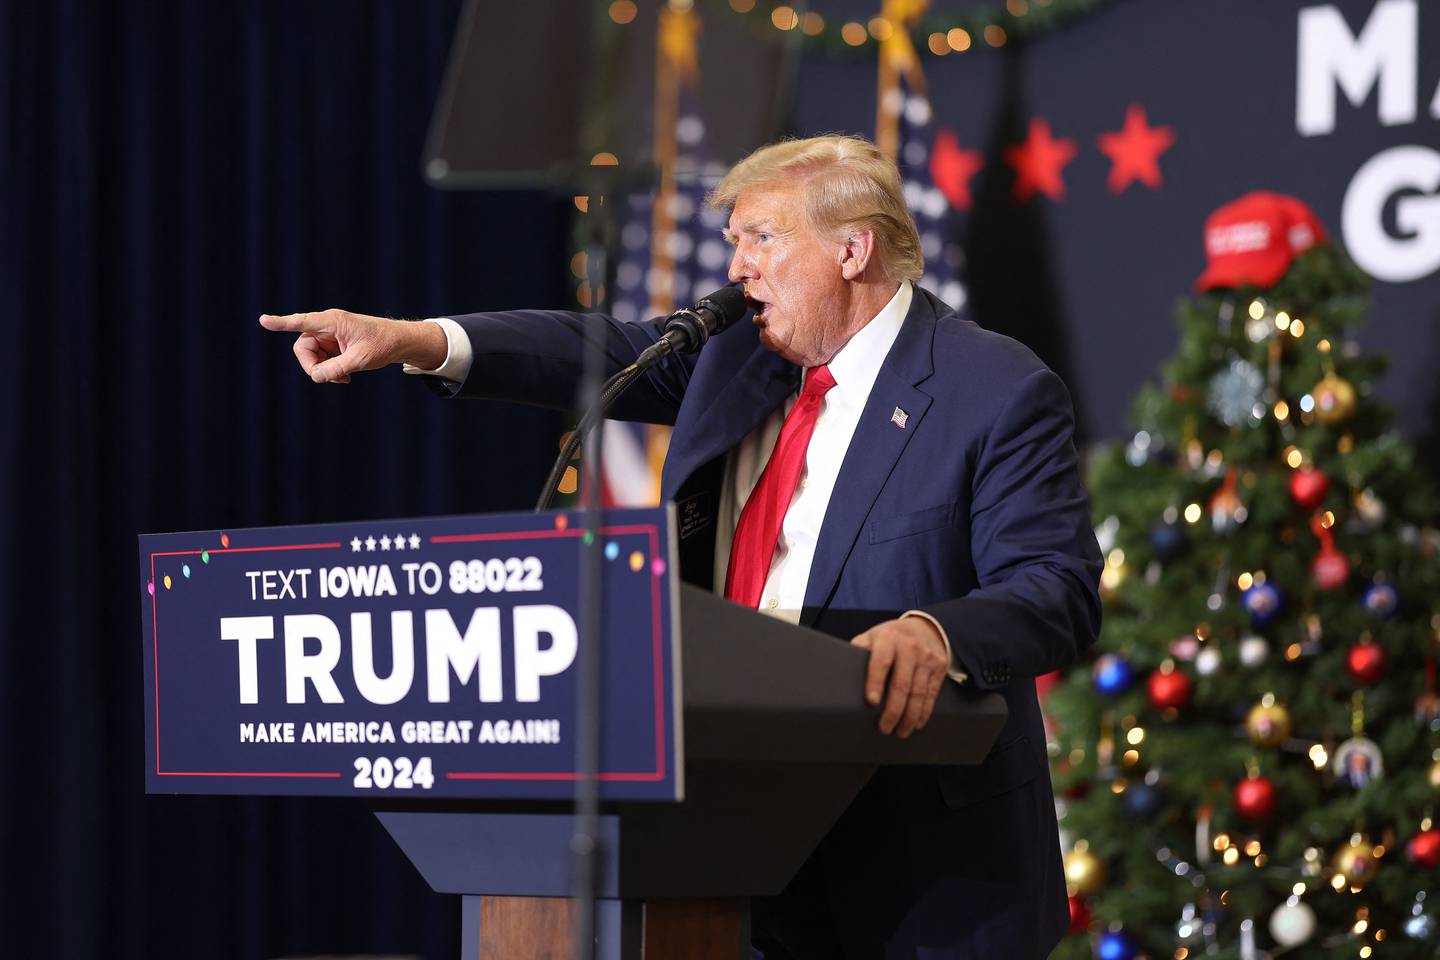 Ekspresident Donald Trump på talerstolen under et valgkampmøte i Iowa.